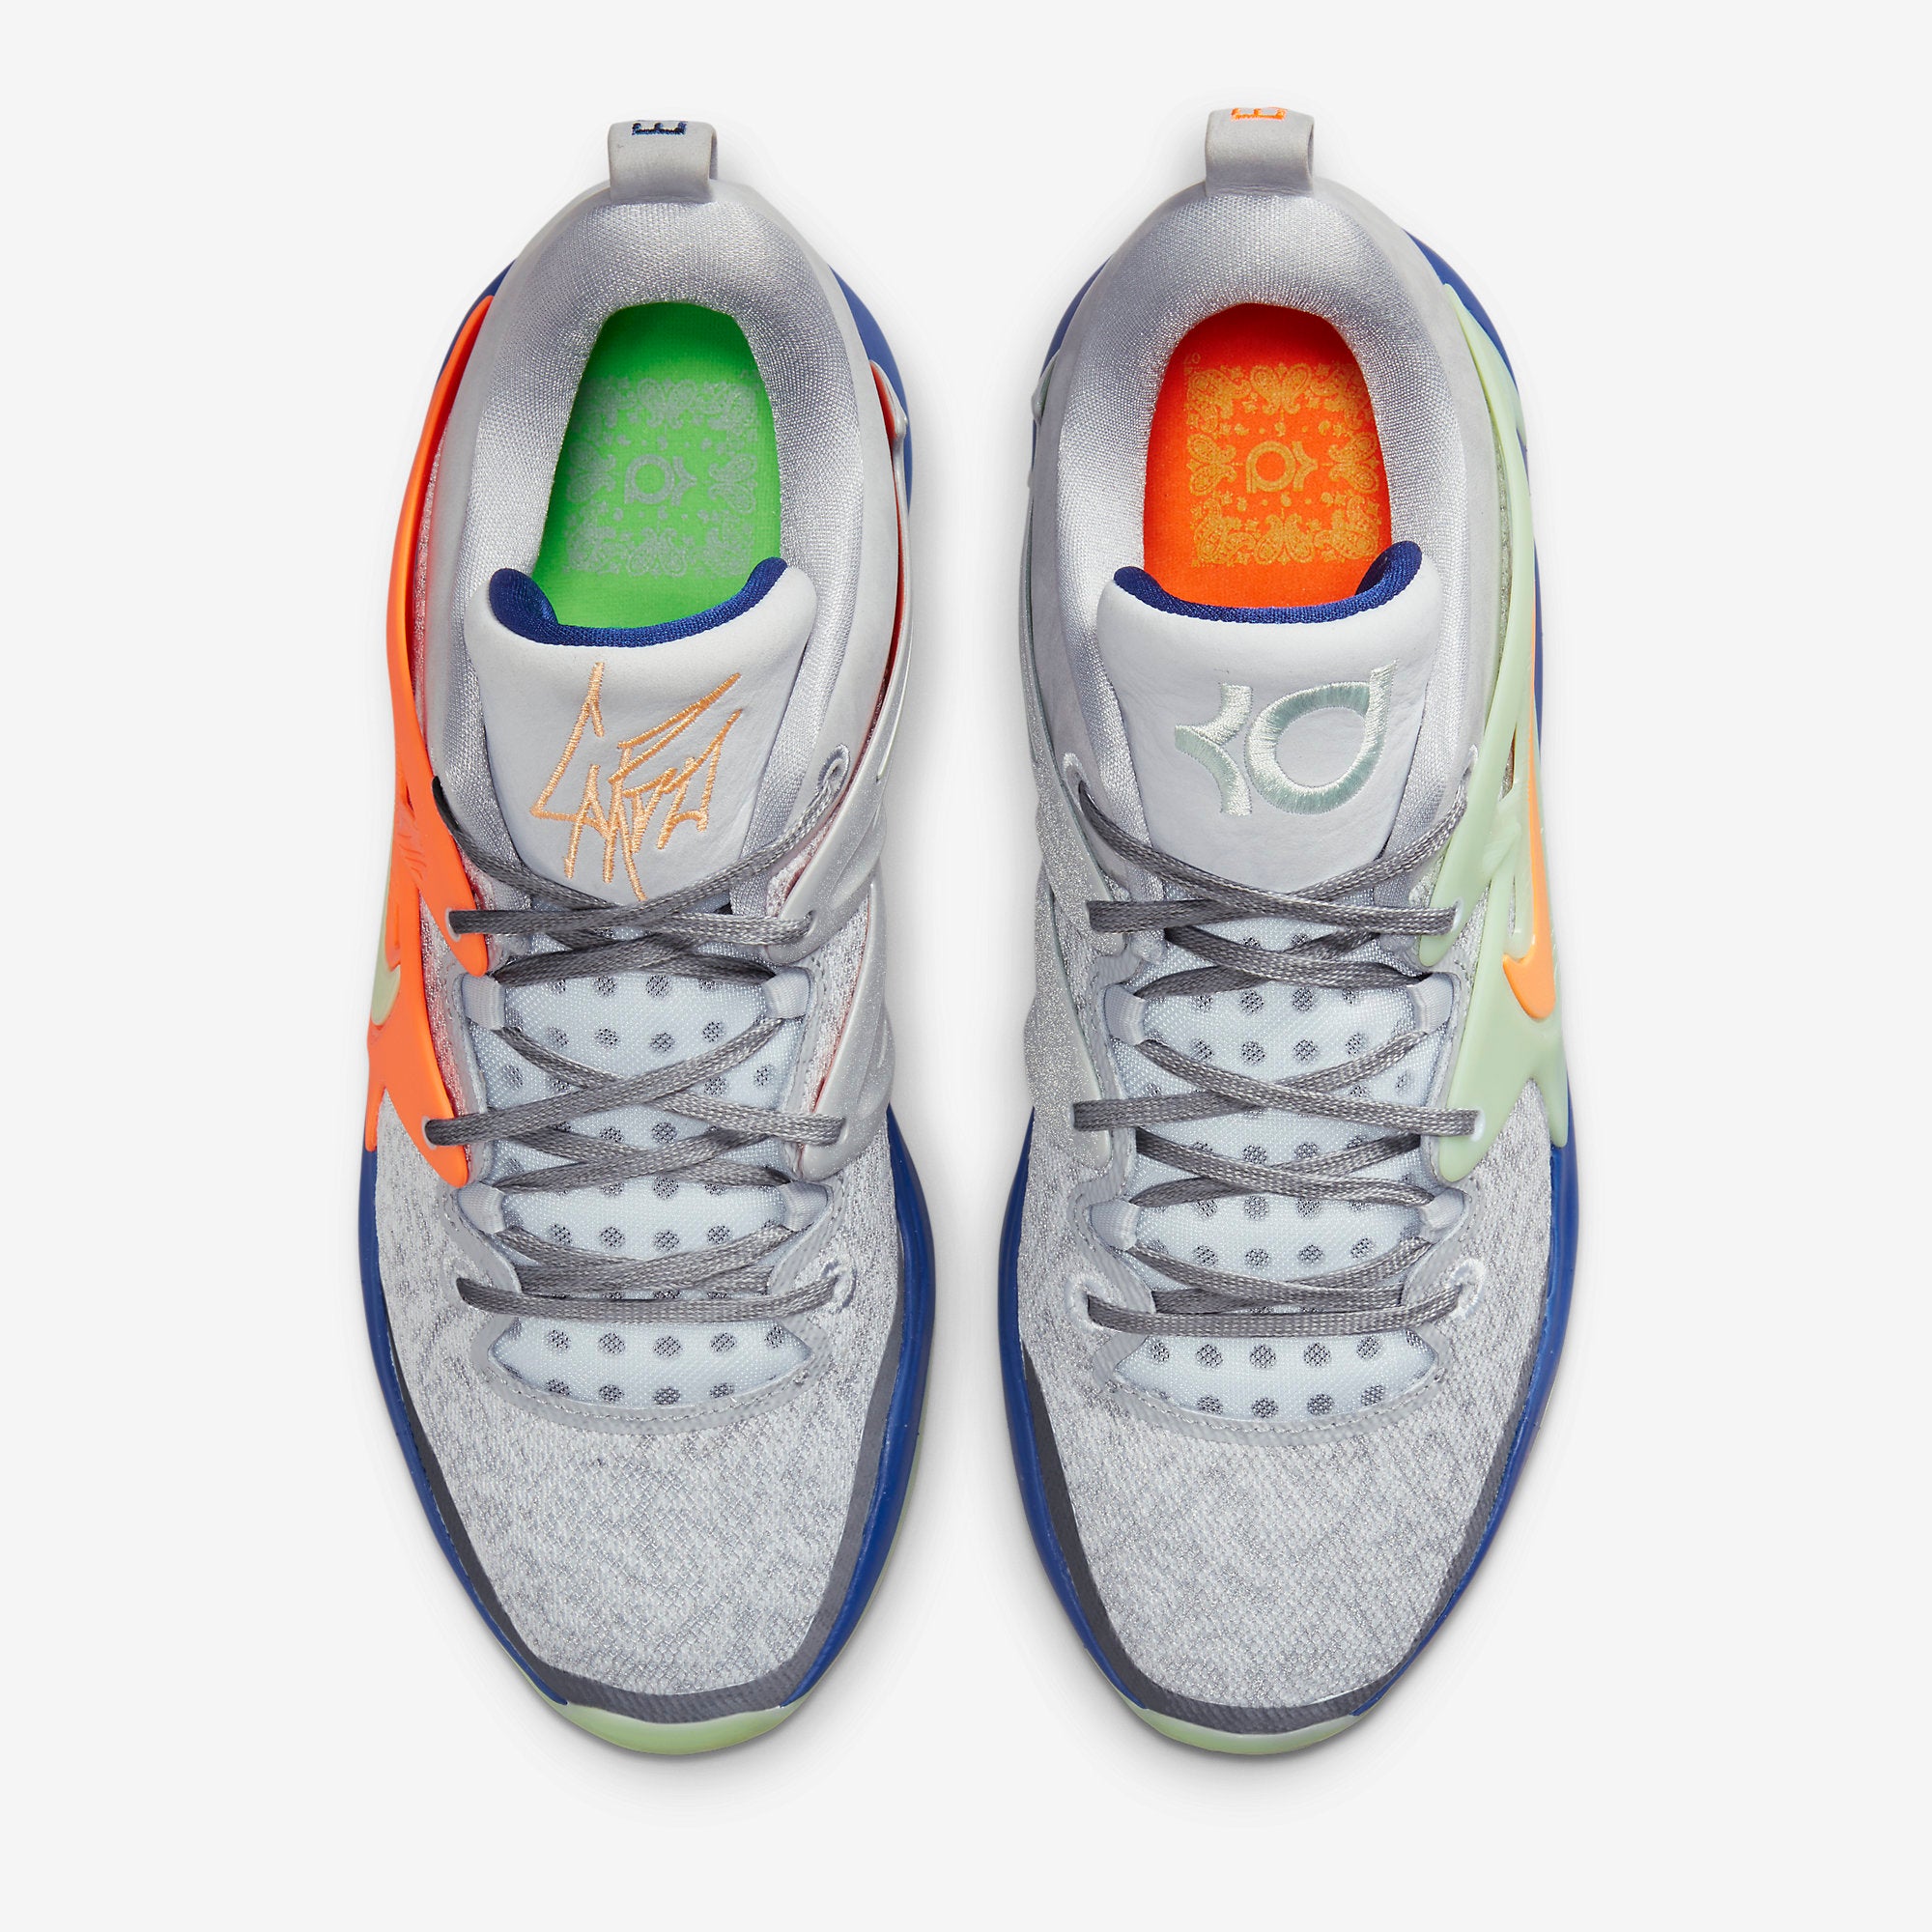 Nike Kevin Durant KD15 basketbalschoenen grijs/blauw